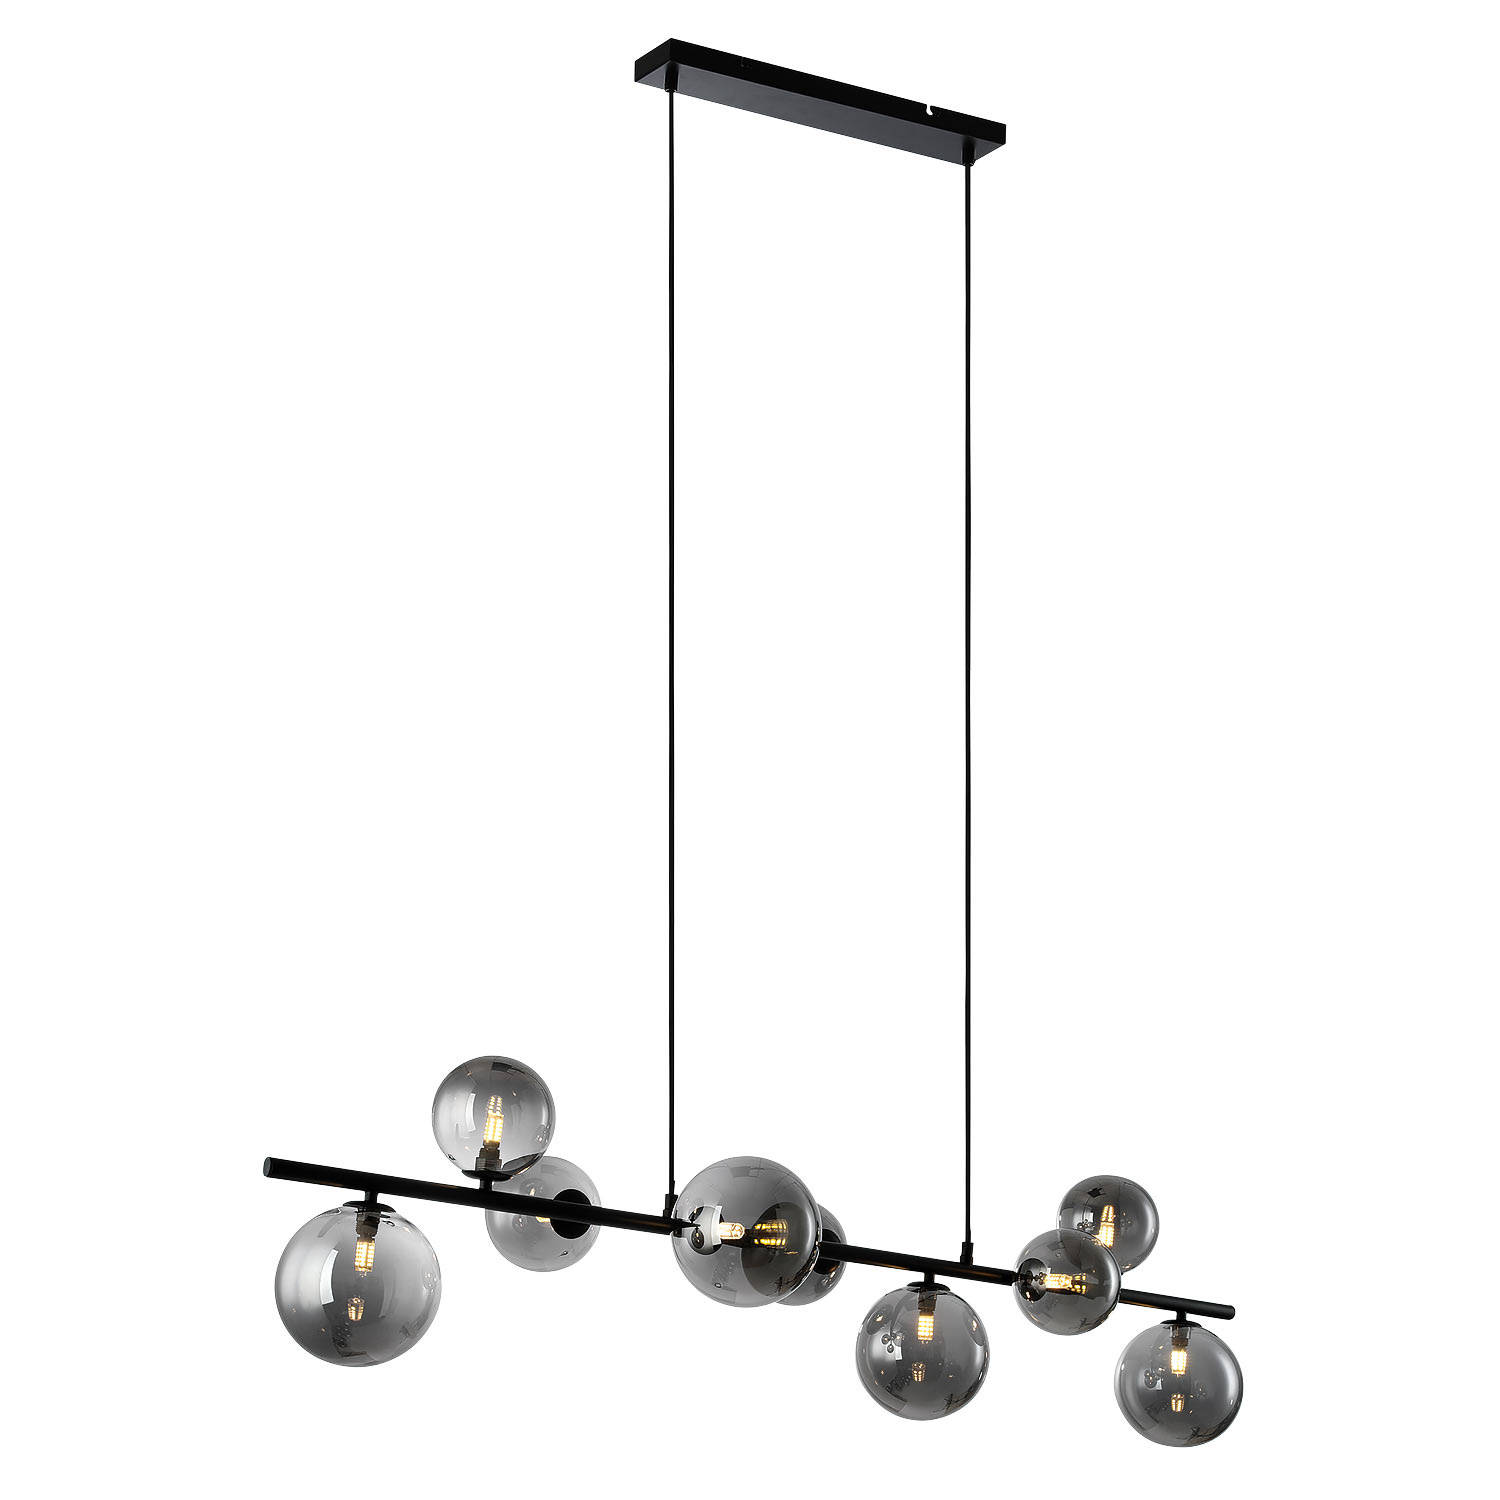 Freelight Hanglamp Calcio 9 lichts excl. 9x G9 LED L 125 cm rook glas zwart